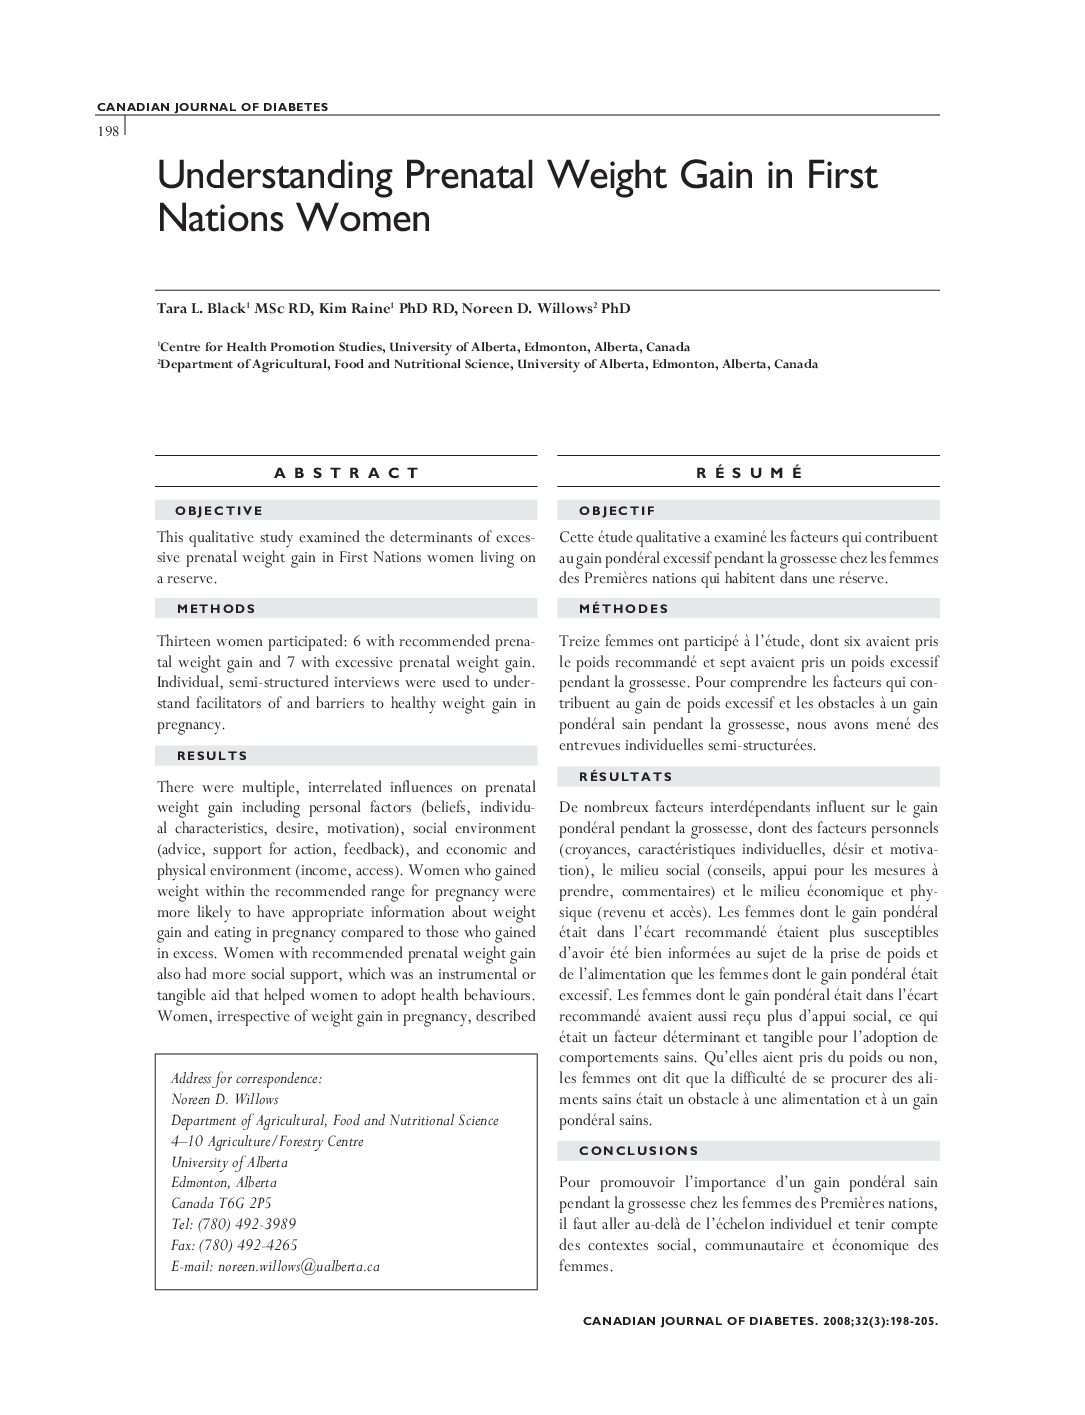 Understanding Prenatal Weight Gain in First Nations Women